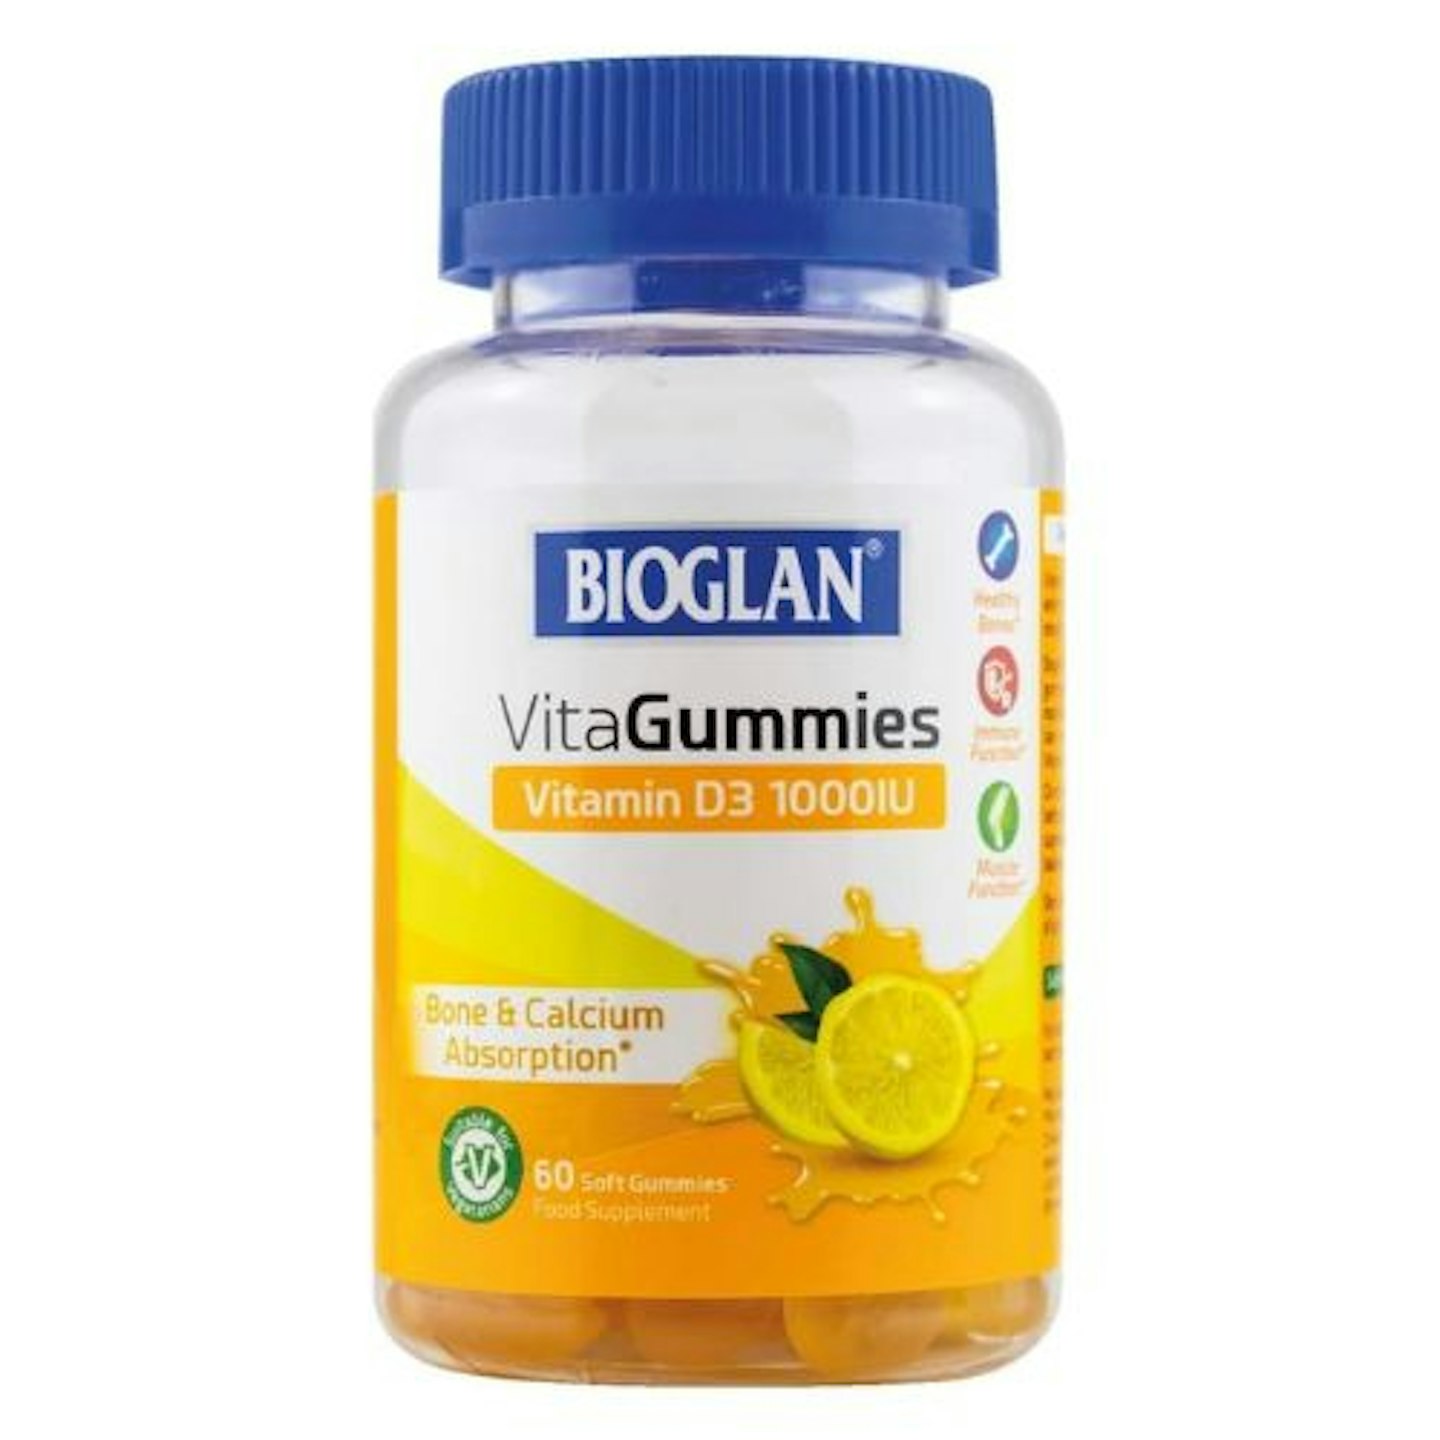 Bioglan Vitamin D3 1000iu Vitagummies